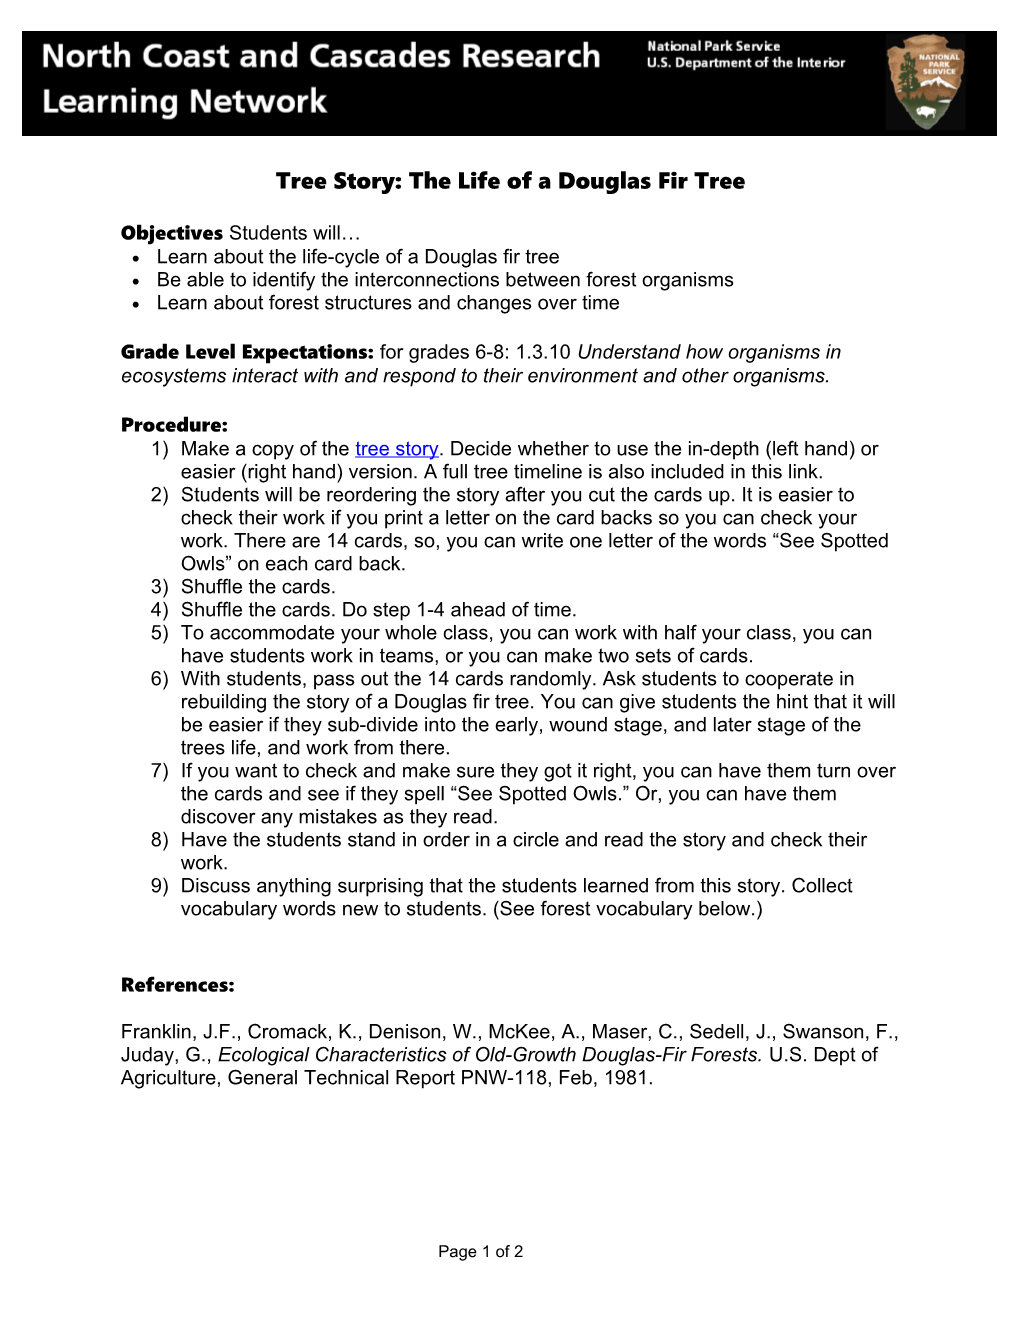 Tree Story: the Long Life of a Douglas Fir Tree